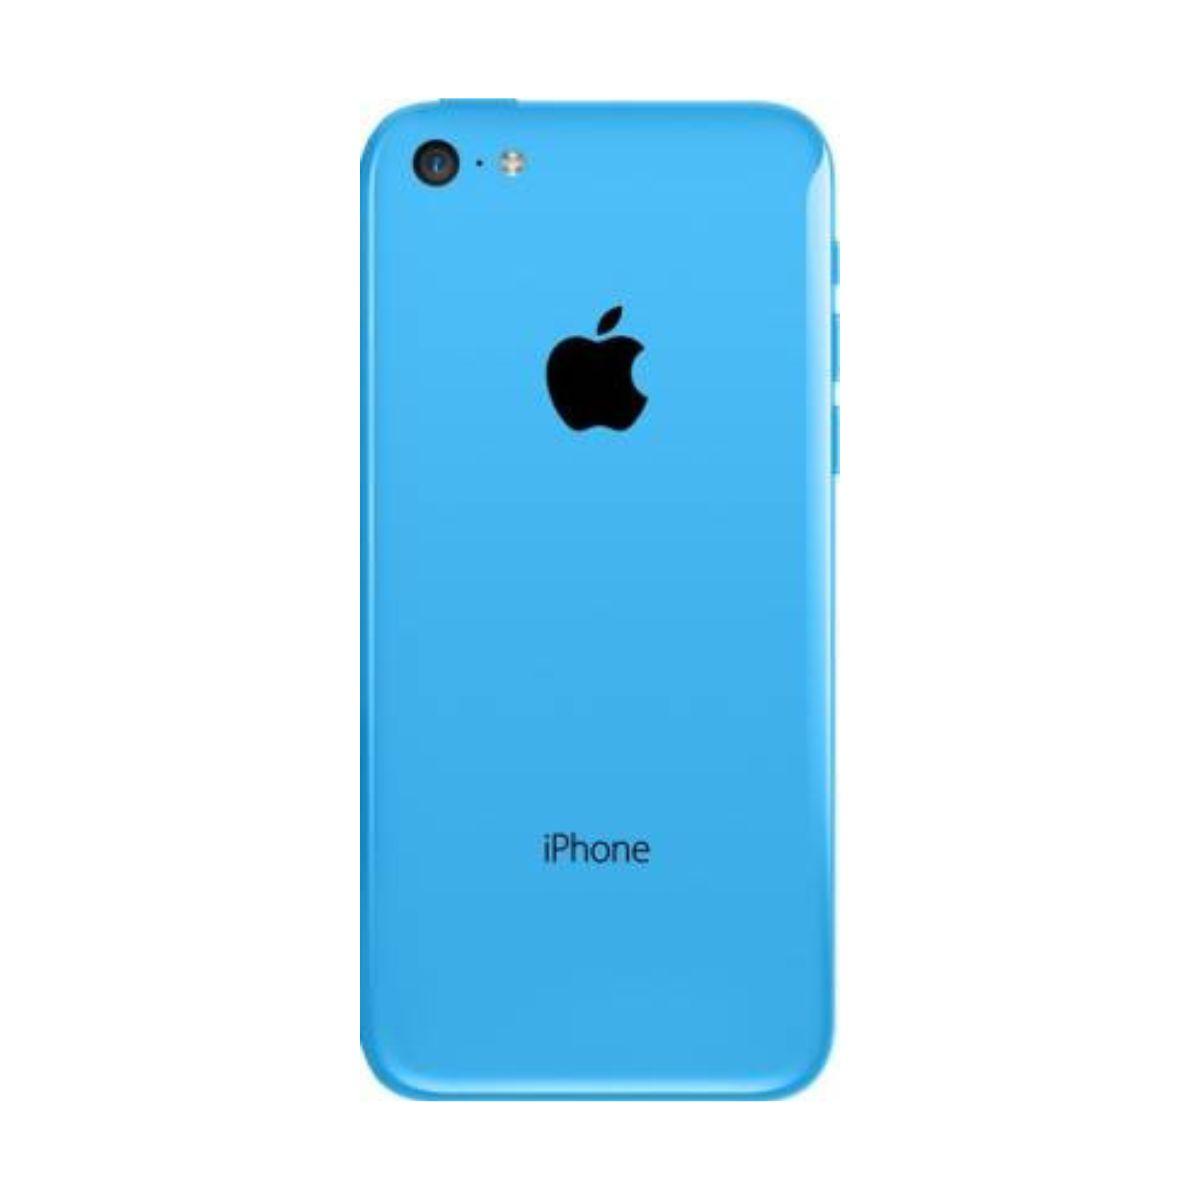 Apple iPhone 5c - Mobilegoo